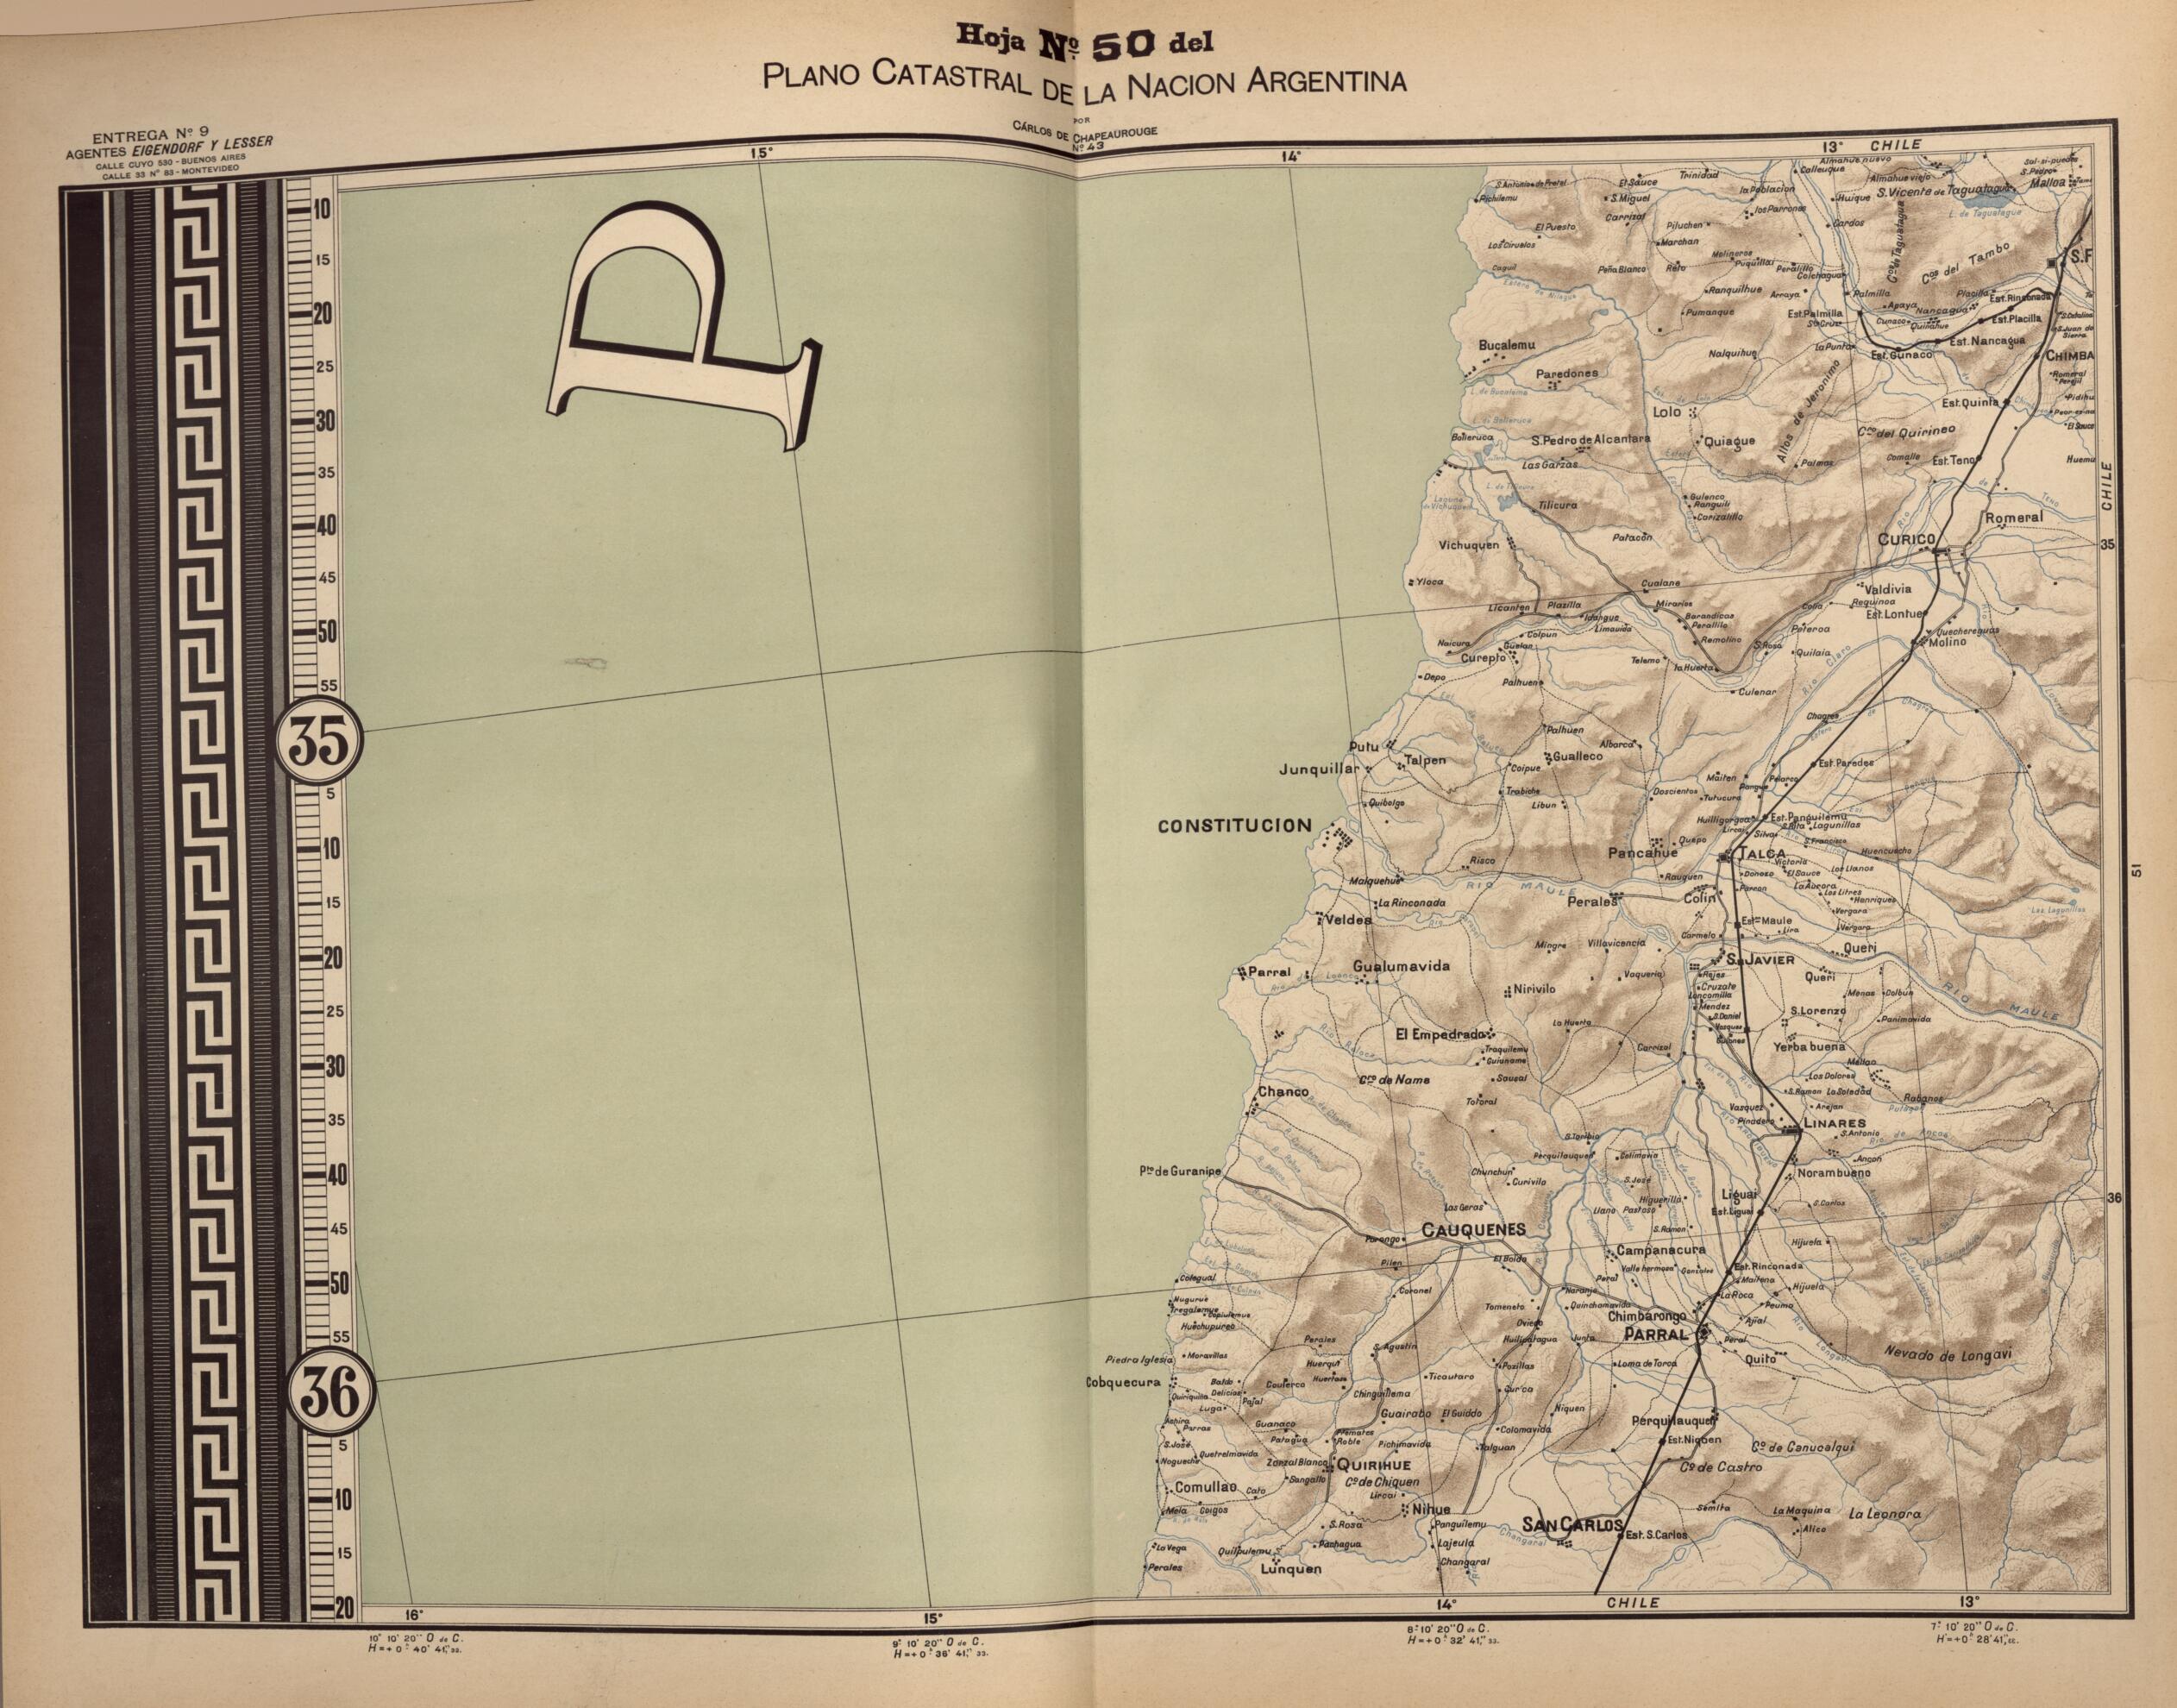 This old map of Plano Catastral De La Nacion Hoja No. 50 from República Argentina from 1905 was created by Carlos De Chapeaurouge in 1905